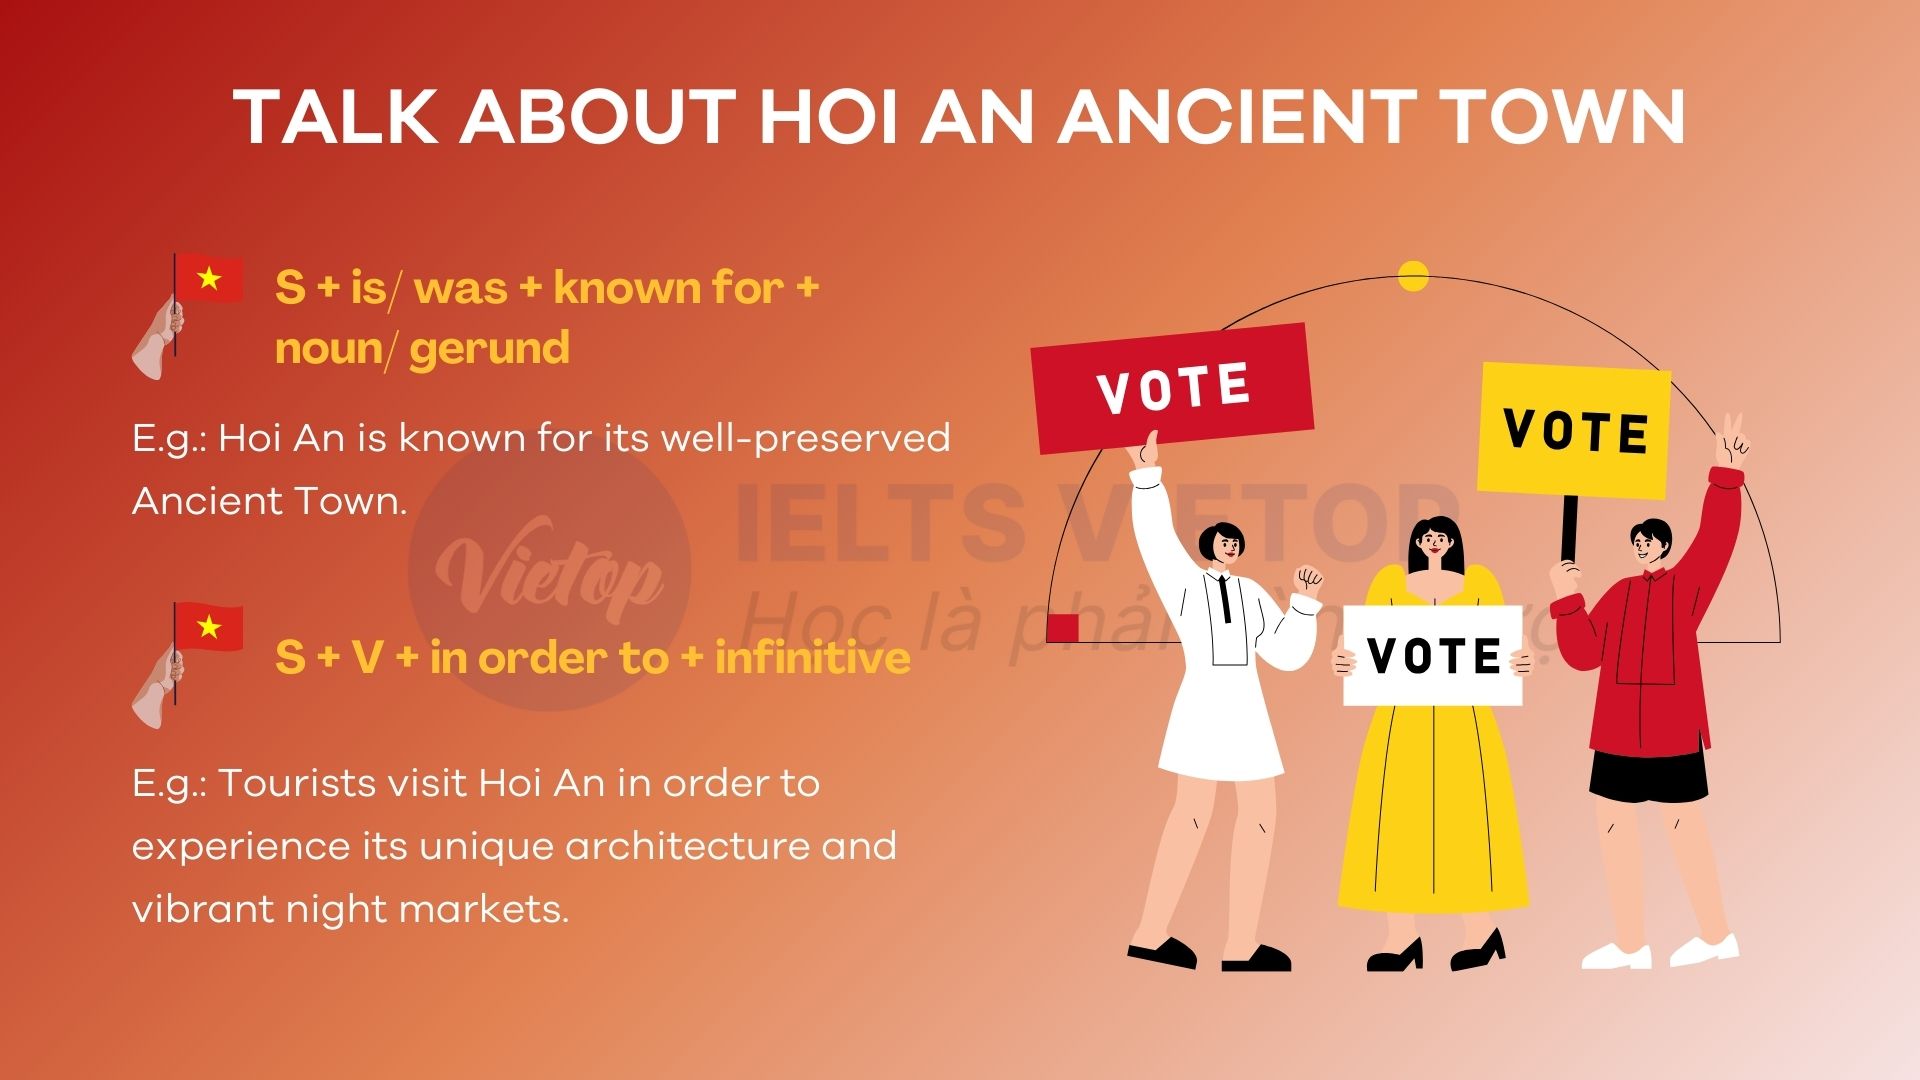 Cấu trúc chủ đề talk about Hoi An ancient town